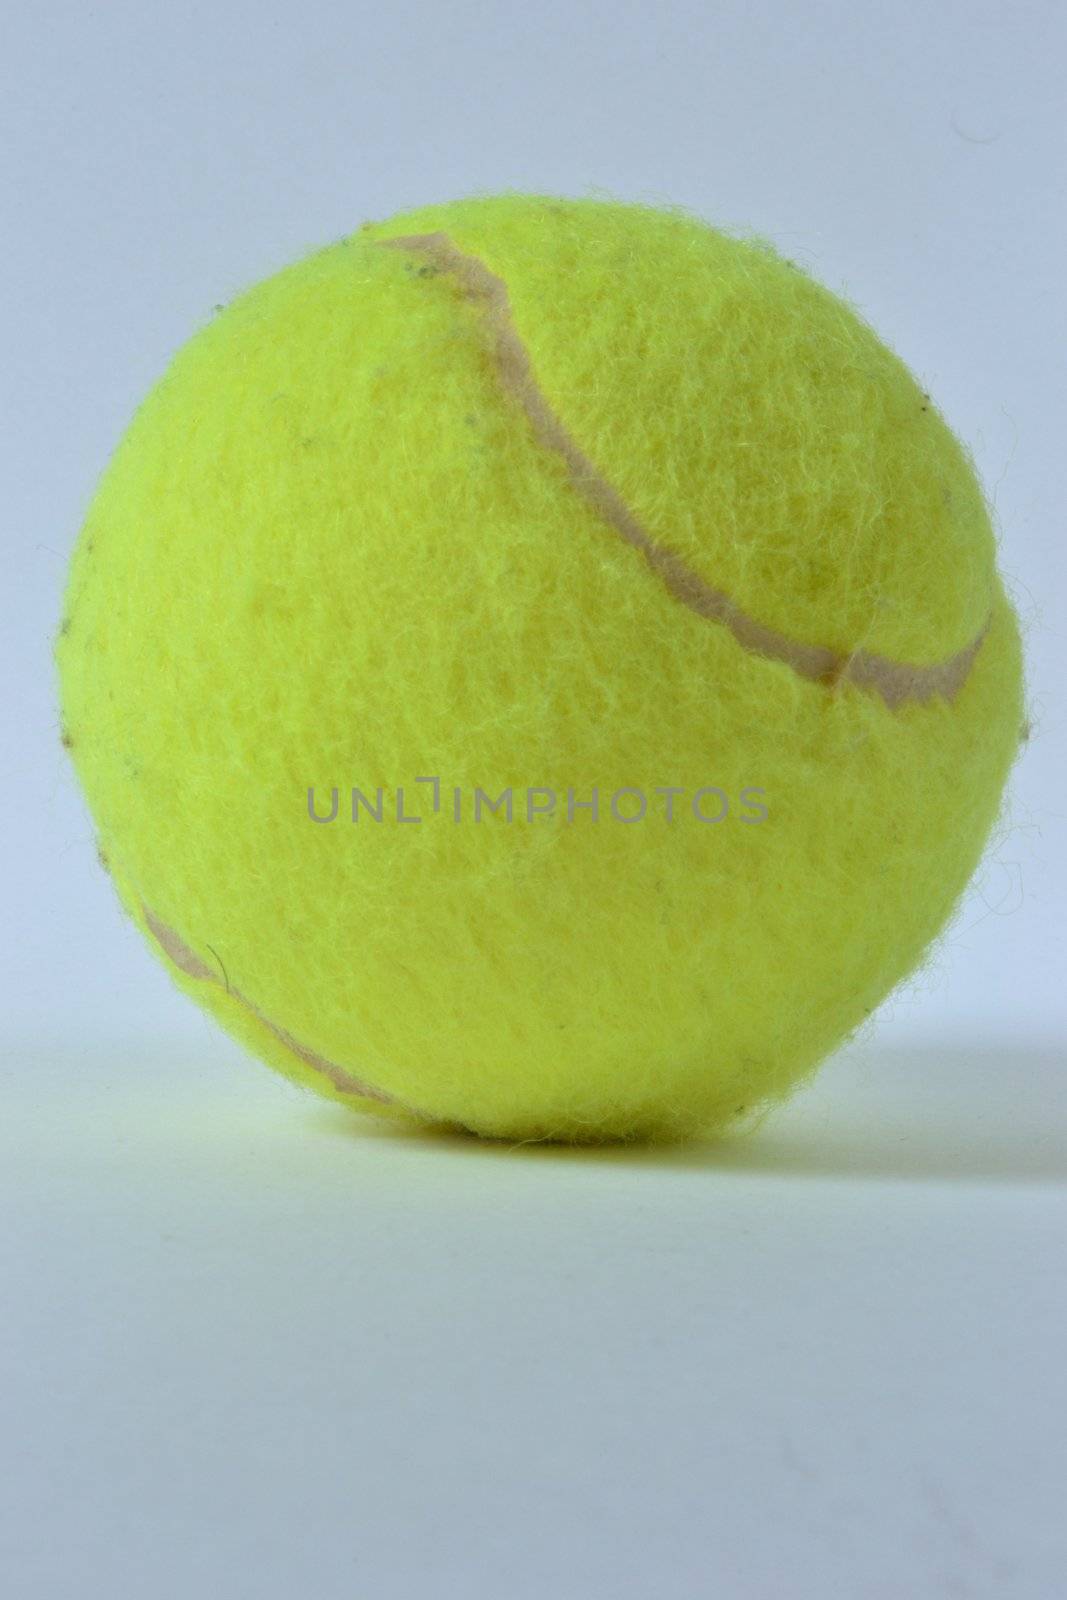 Single yellow tennis ball over white background